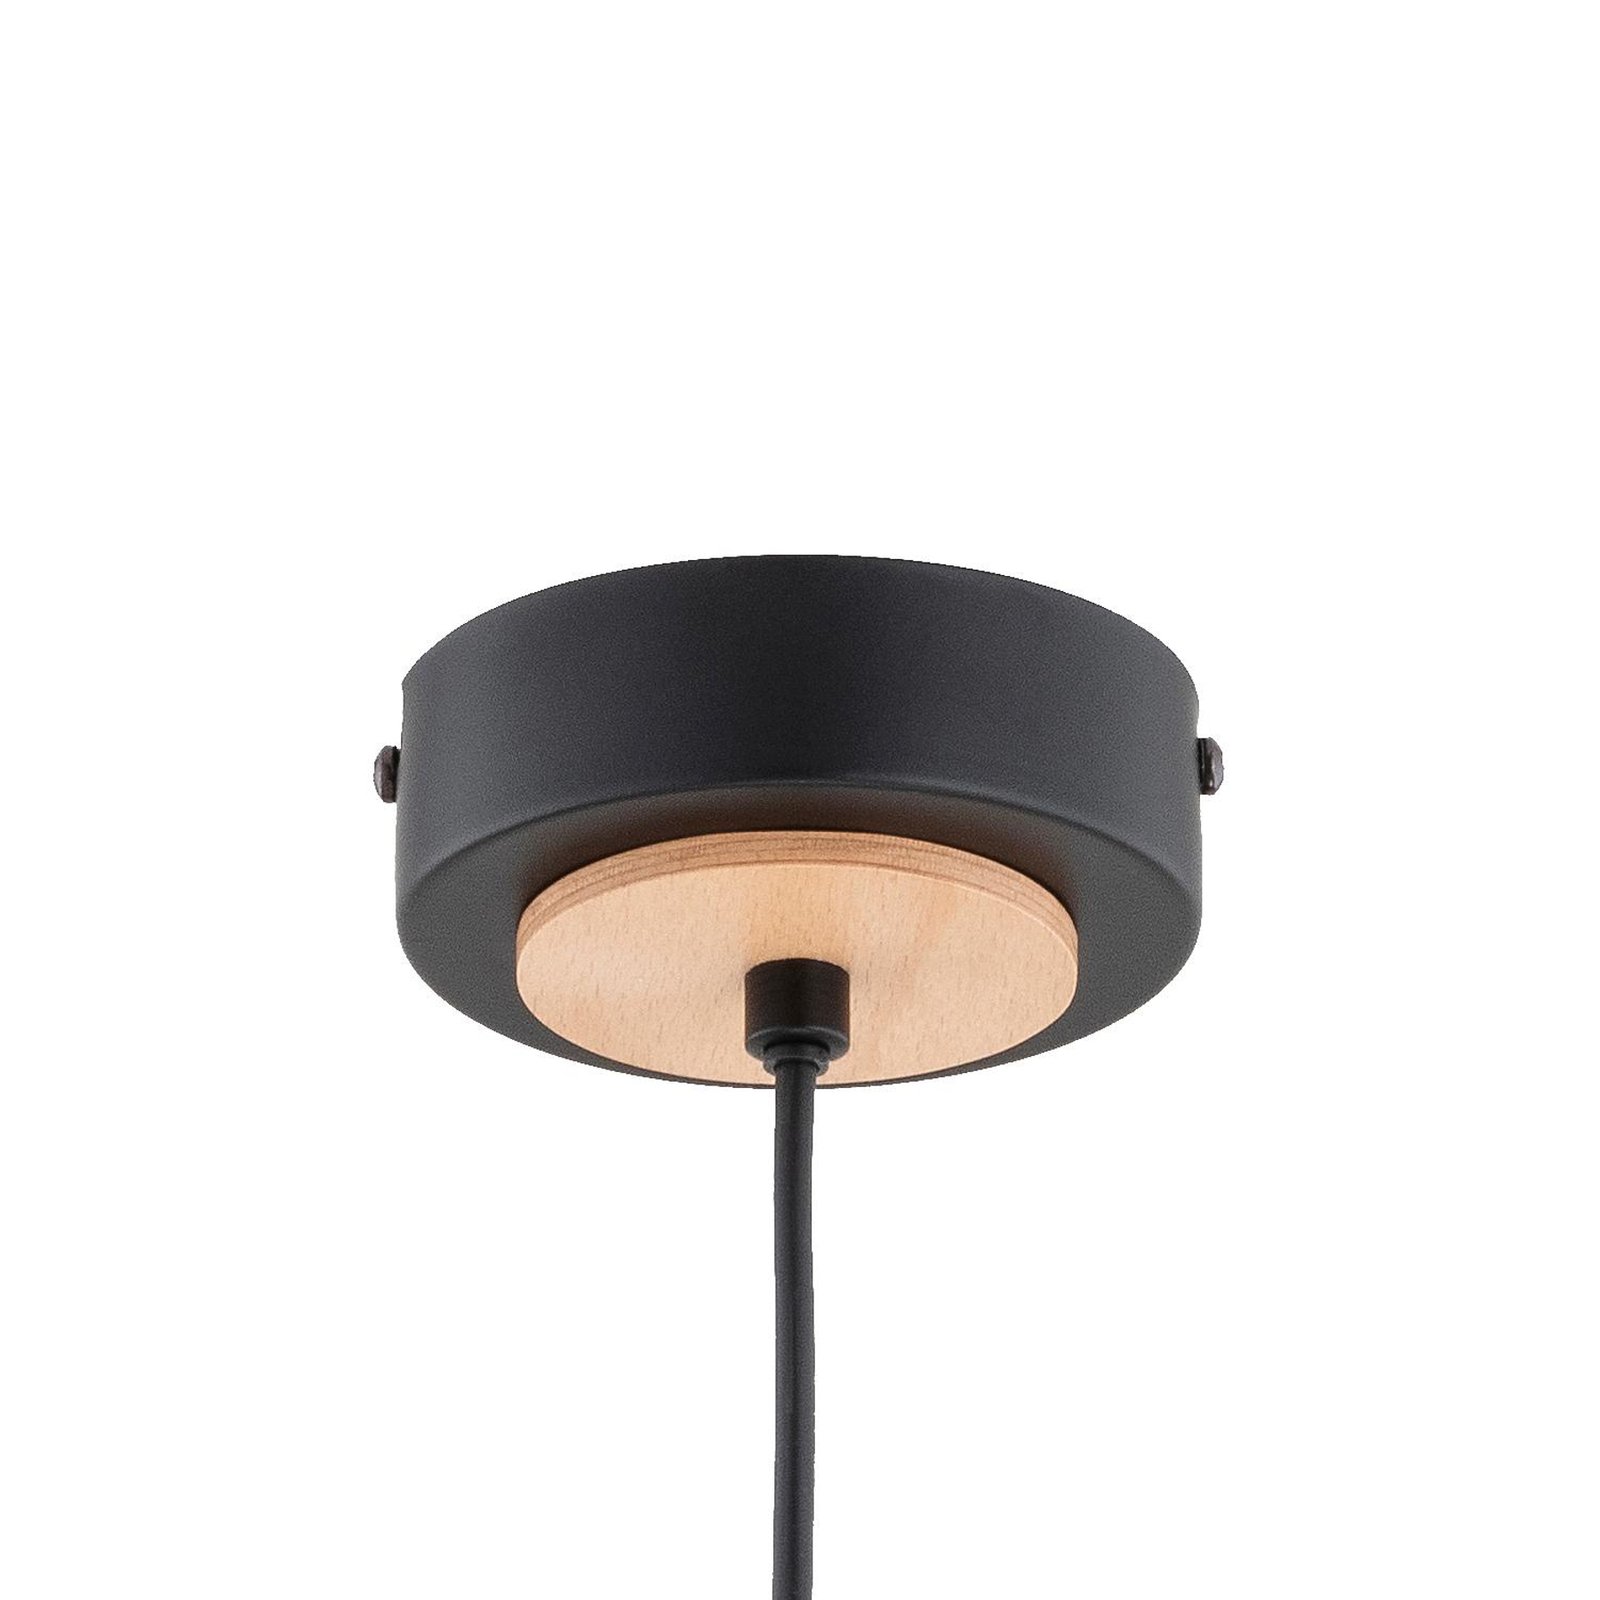 Rupert pendant light, wood-coloured / black, height 85 cm, wood